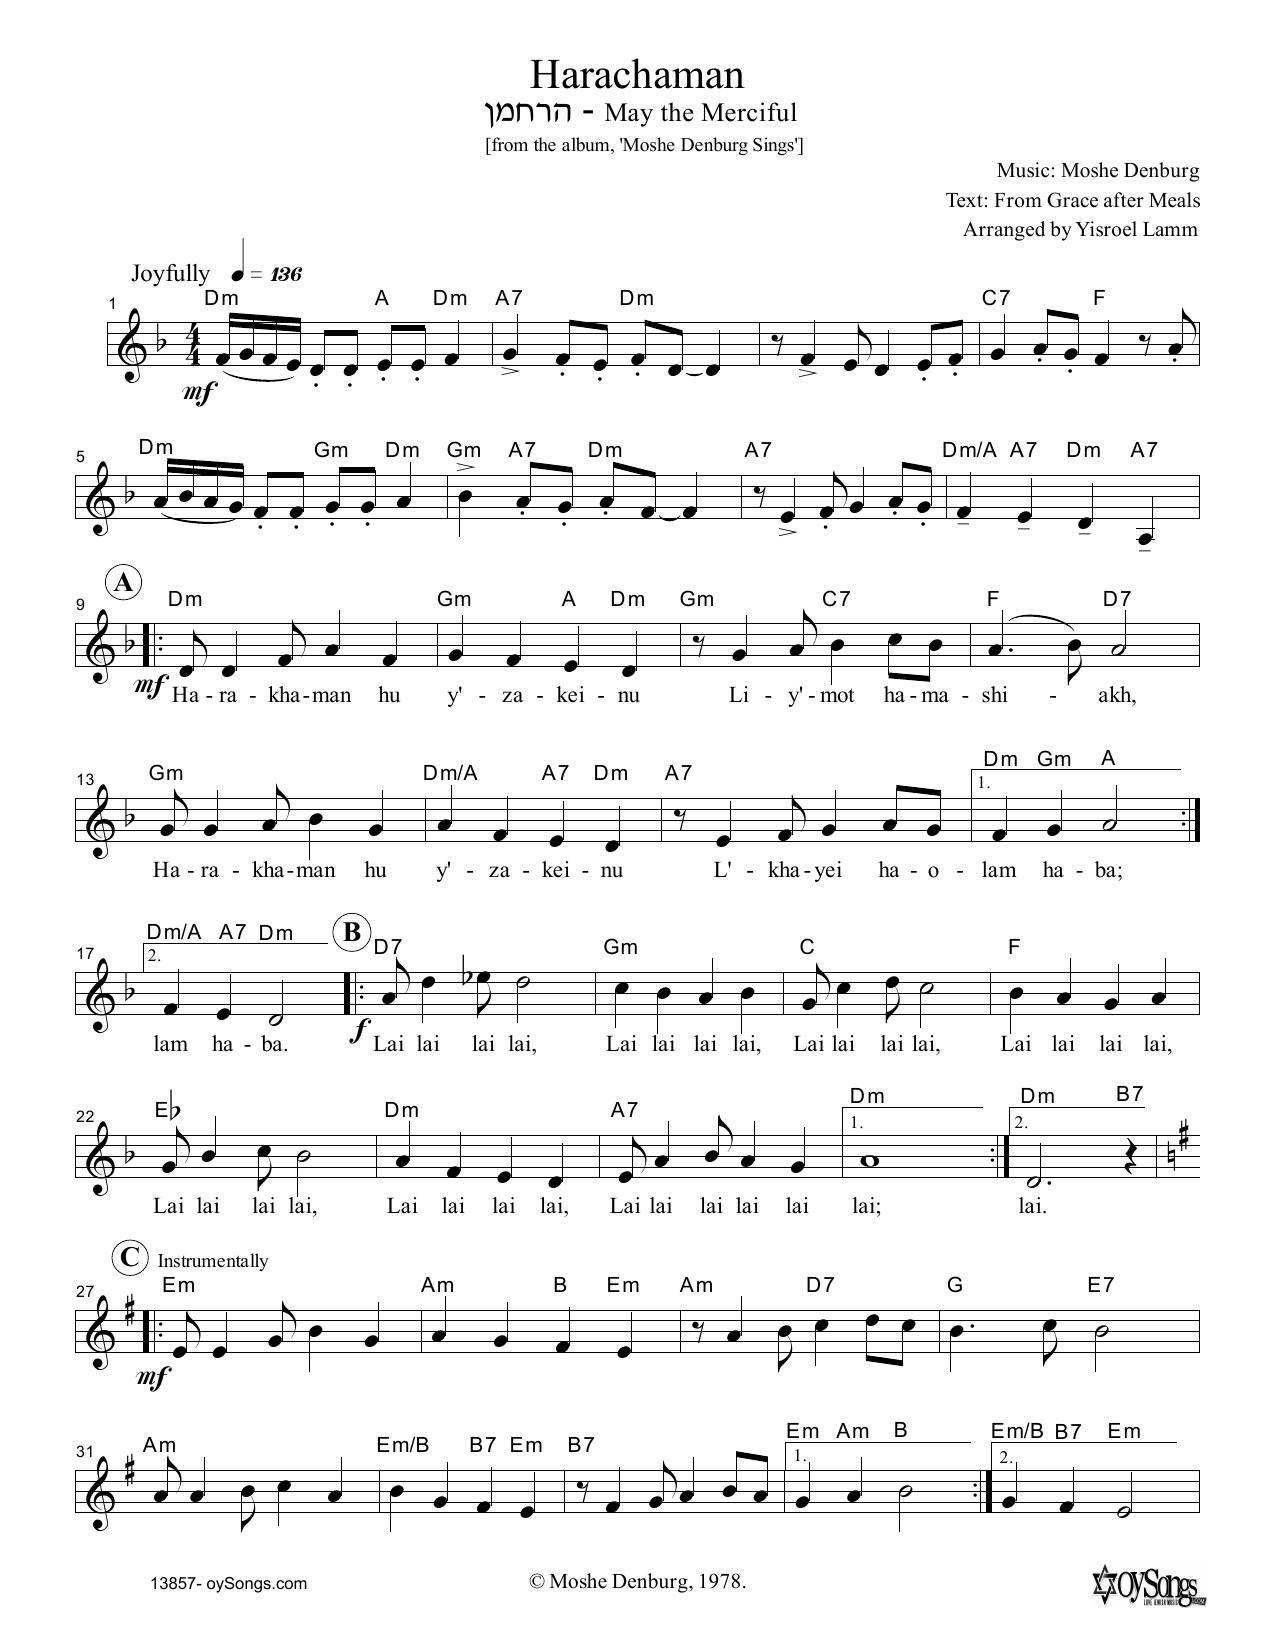 Moshe Denburg Harachaman Sheet Music Notes & Chords for Melody Line, Lyrics & Chords - Download or Print PDF